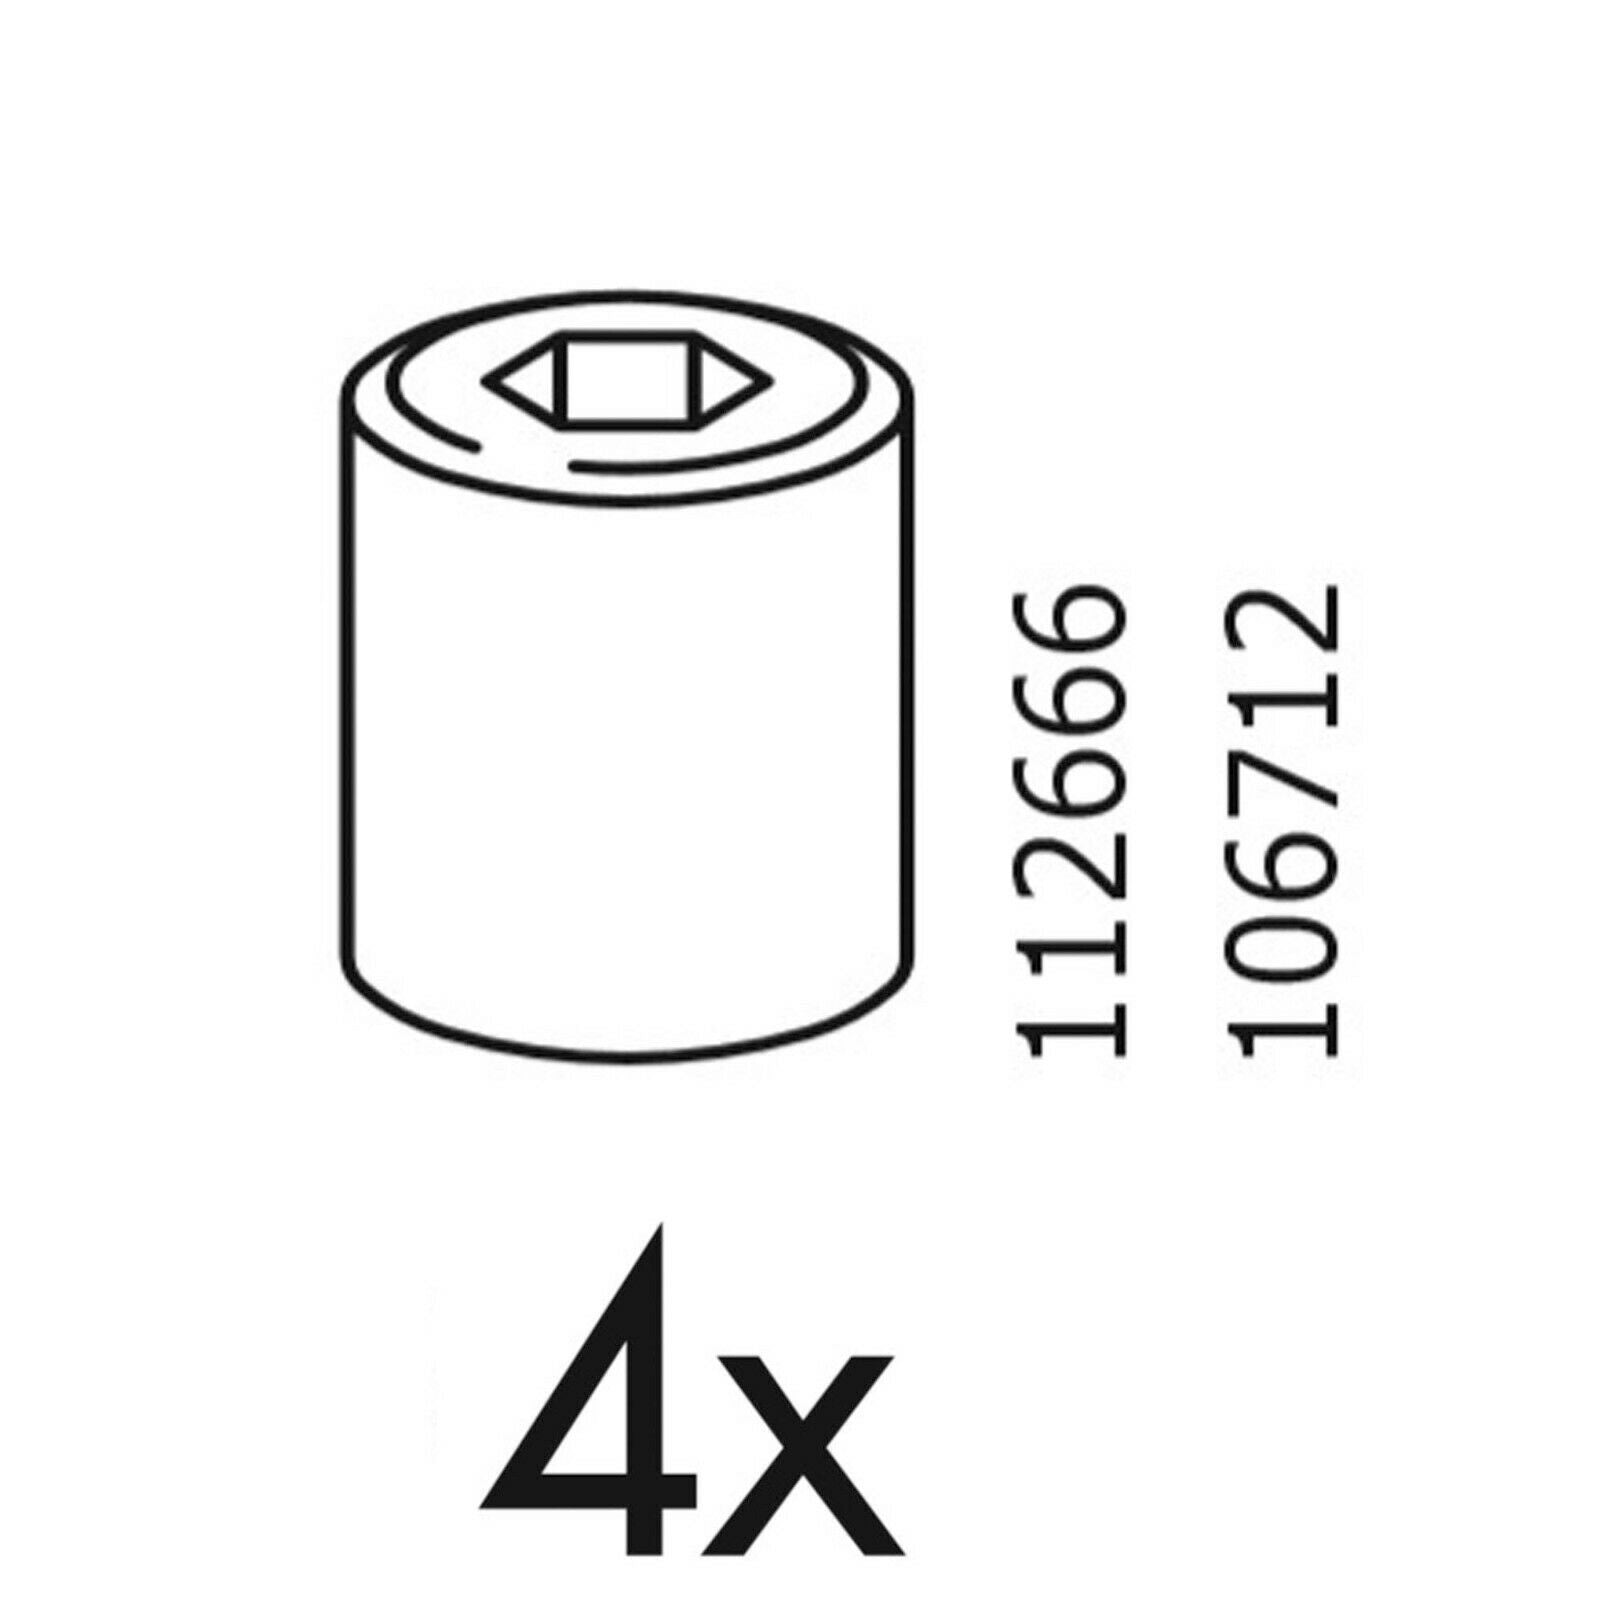 IKEA Nut Metric Sleeves Part # 106712 (4 Pack) Furniture Hardware Fittings Parts